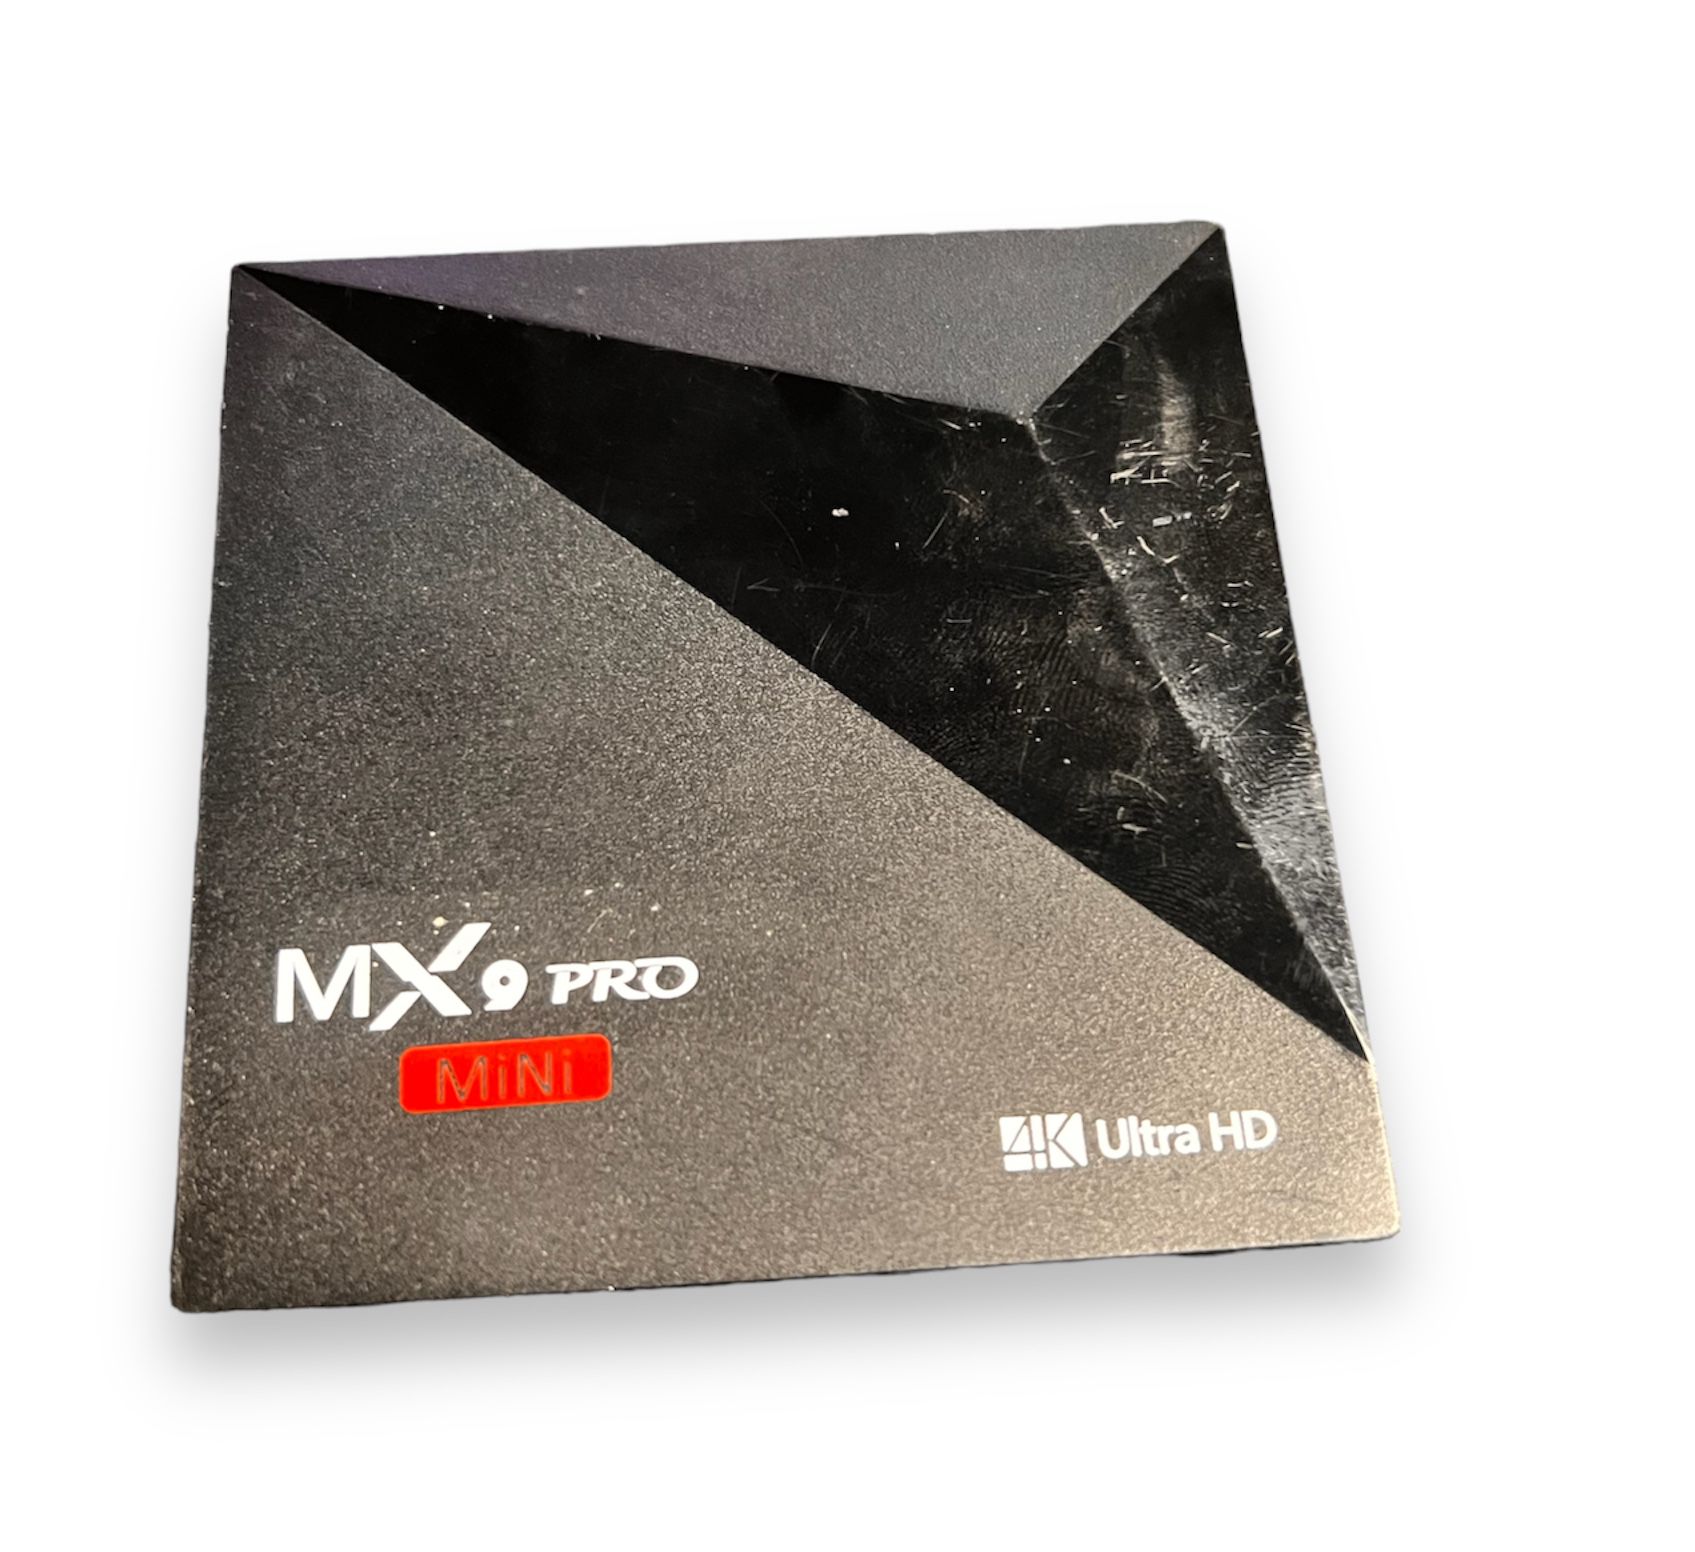 MX9 PRO Android Box 